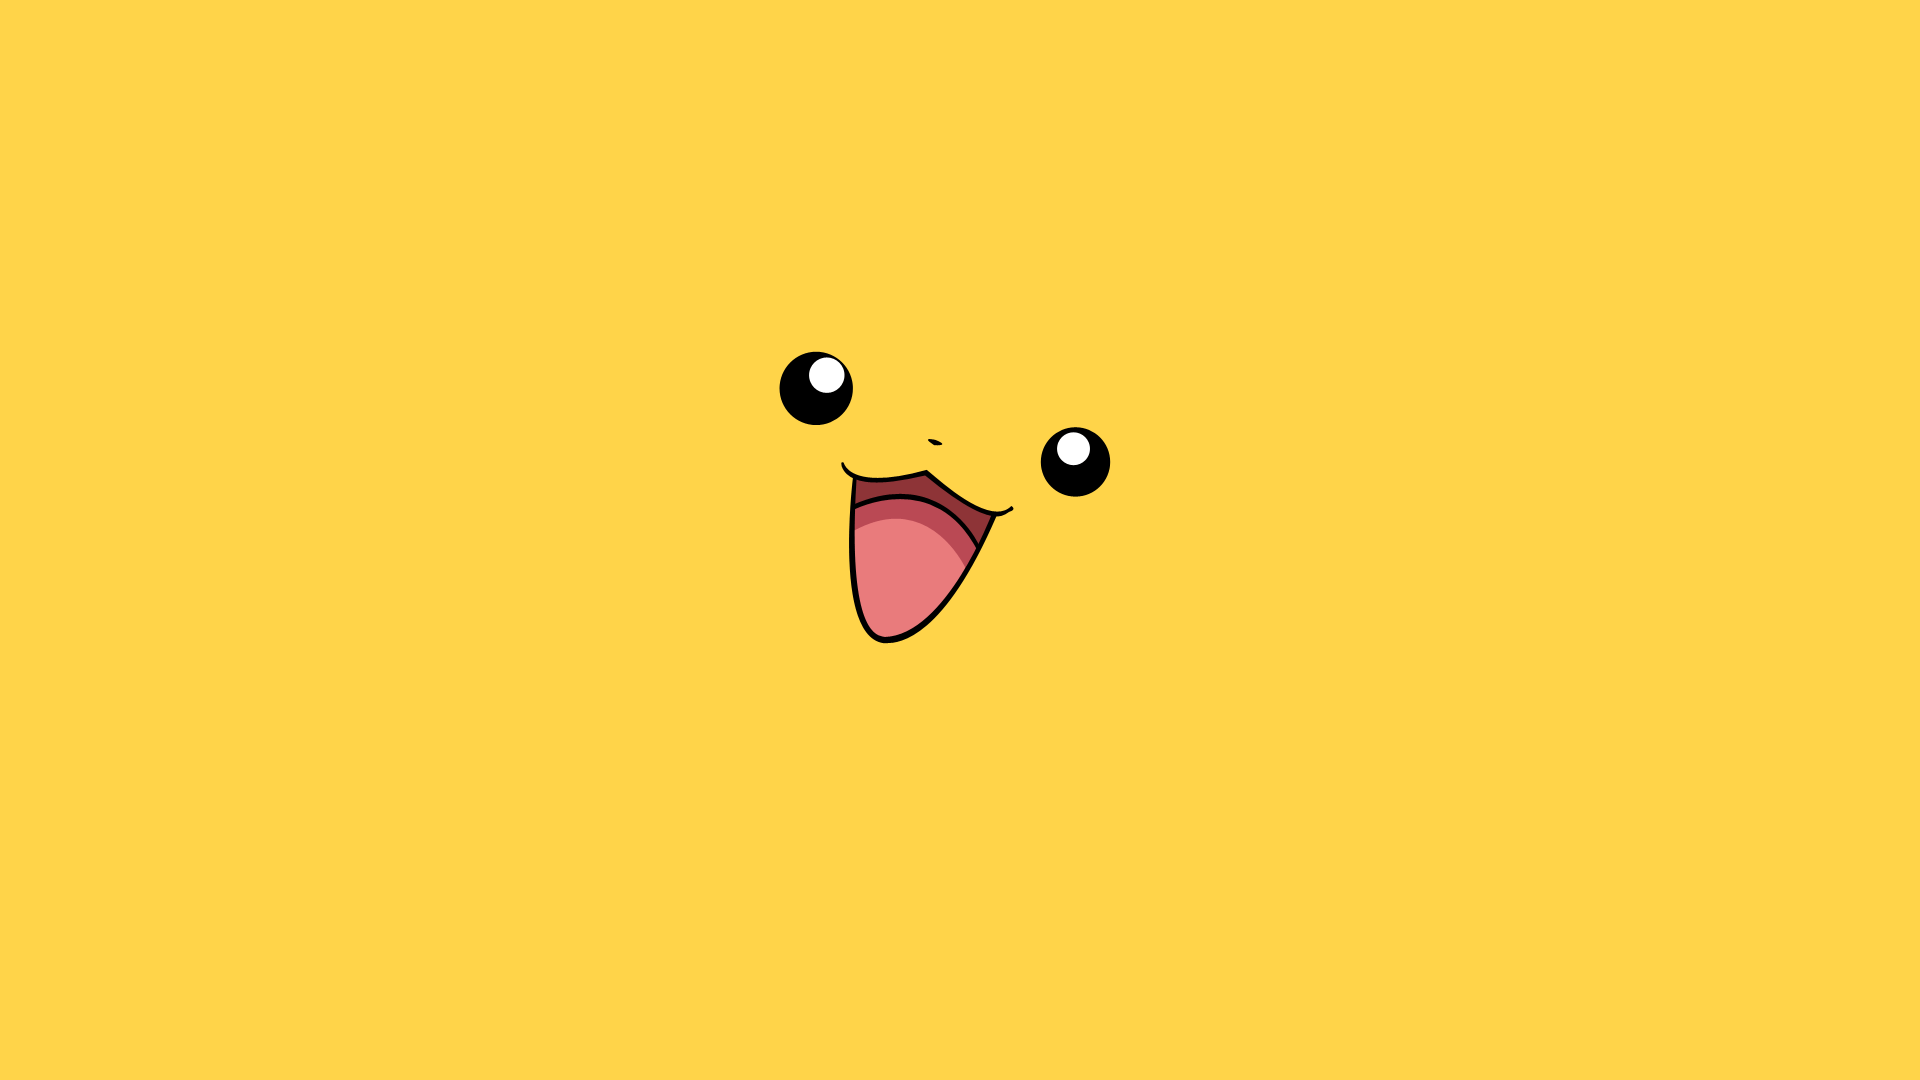 Wallpaper For > Pikachu Background Tumblr